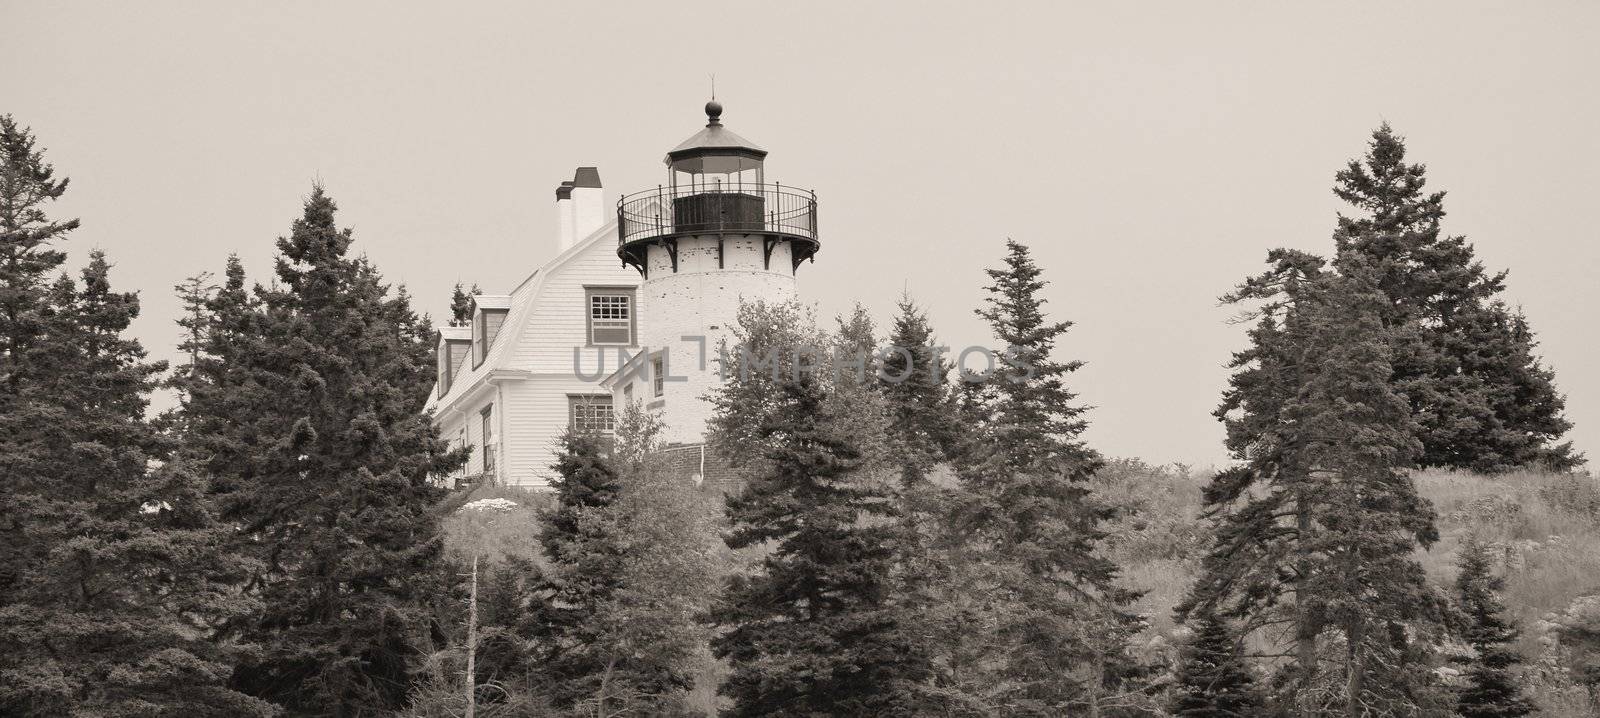 Bar Harbor Light House by northwoodsphoto